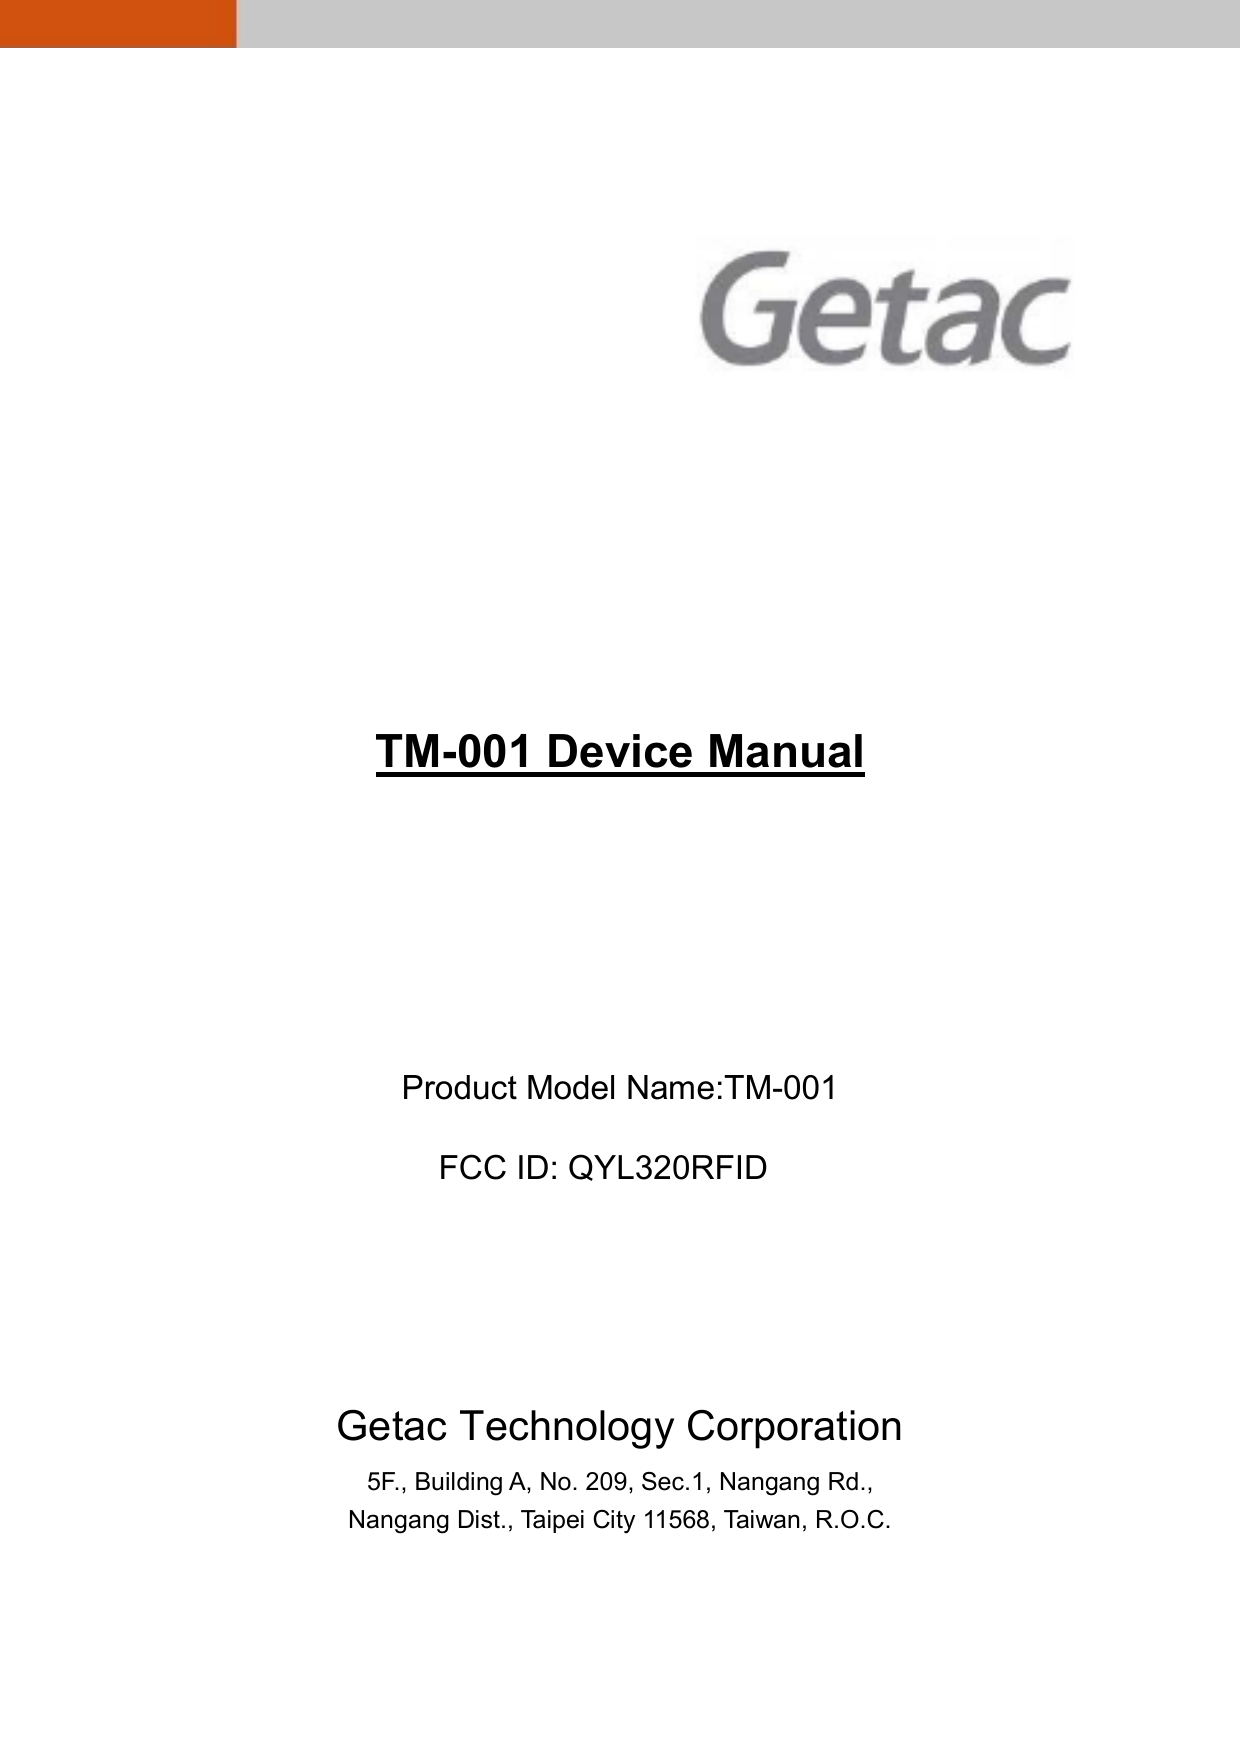                     TM-001 Device Manual       Product Model Name:TM-001 FCC ID: QYLB320RFID      Getac Technology Corporation 5F., Building A, No. 209, Sec.1, Nangang Rd., Nangang Dist., Taipei City 11568, Taiwan, R.O.C.  FCC ID: QYL320RFID